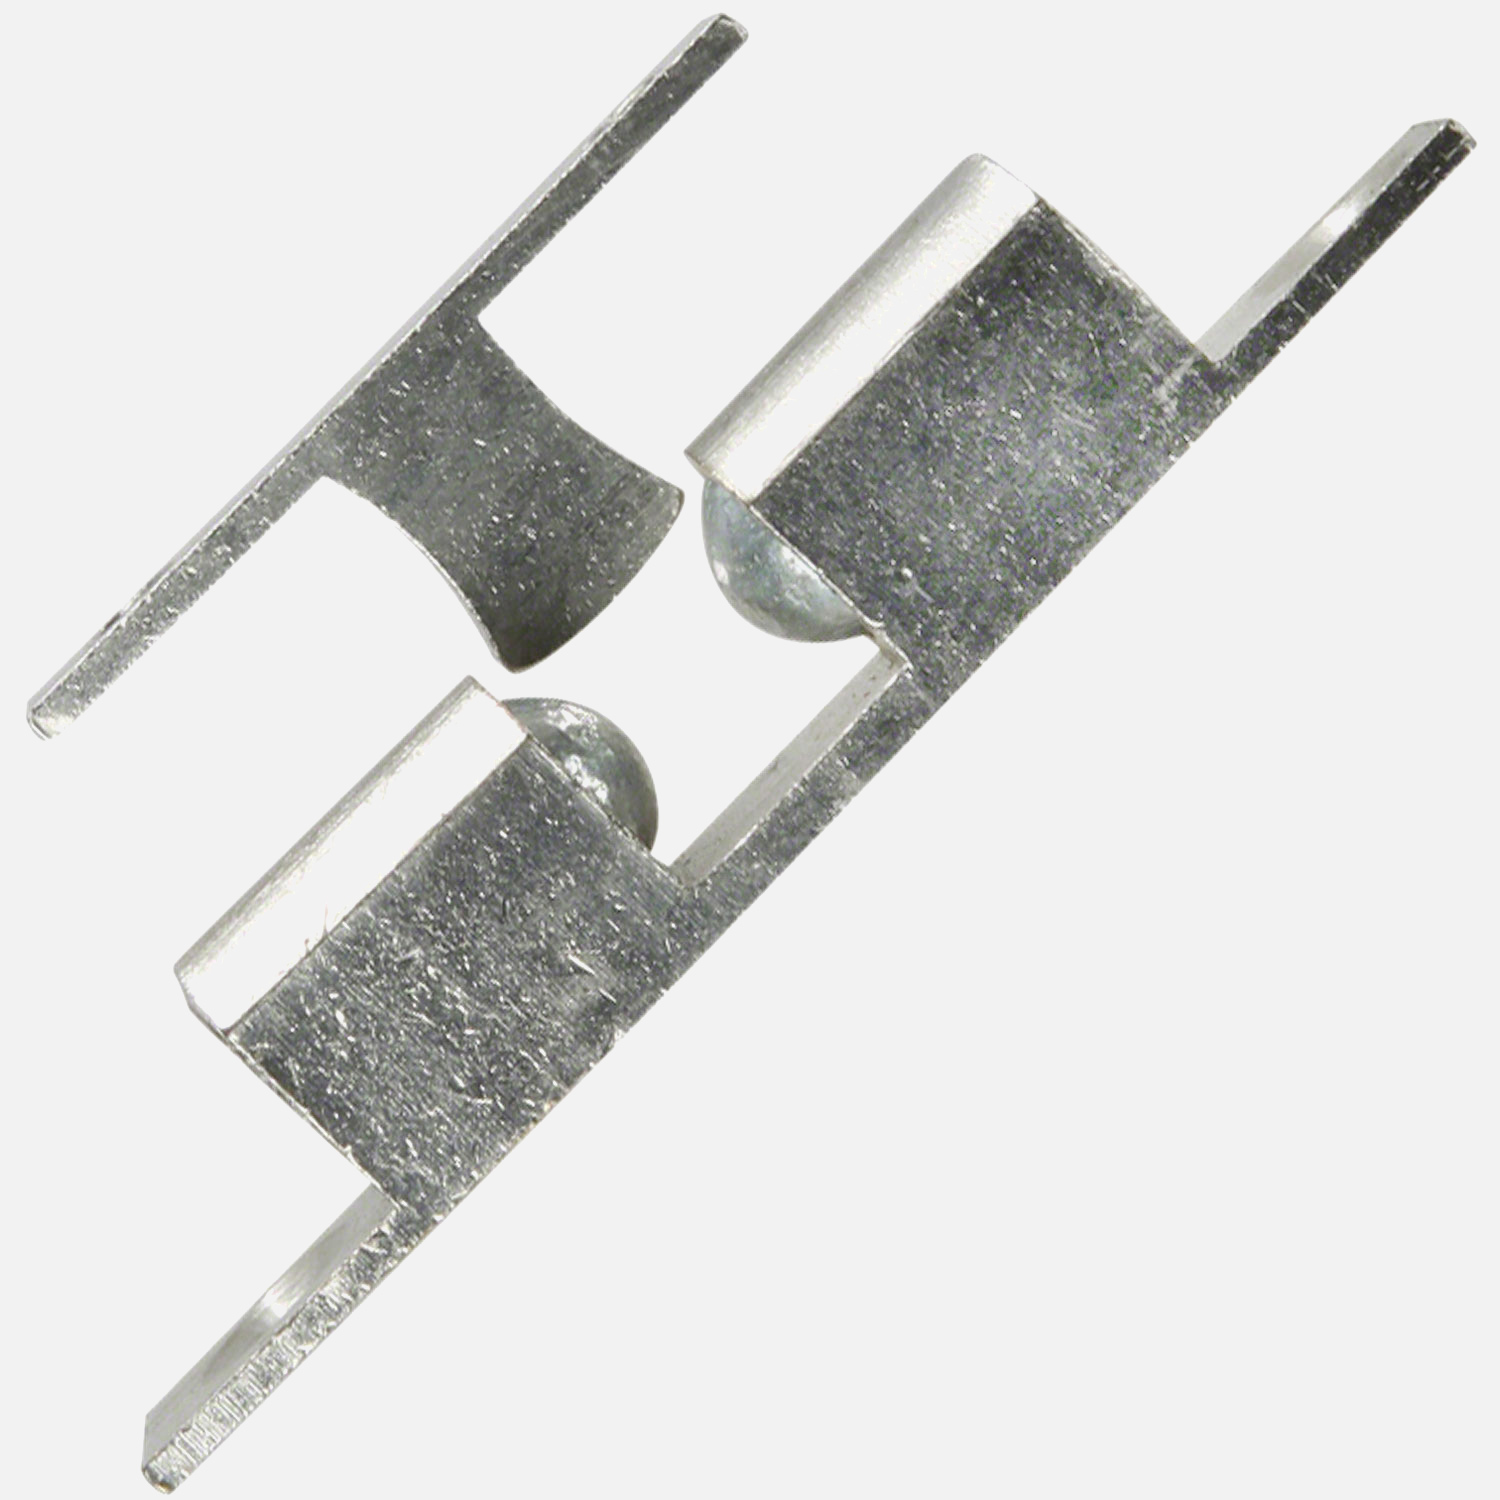 1 HSI Ideal-Schnäpper - mit Stahlkugeln - Messing - vernickelt - 60mm